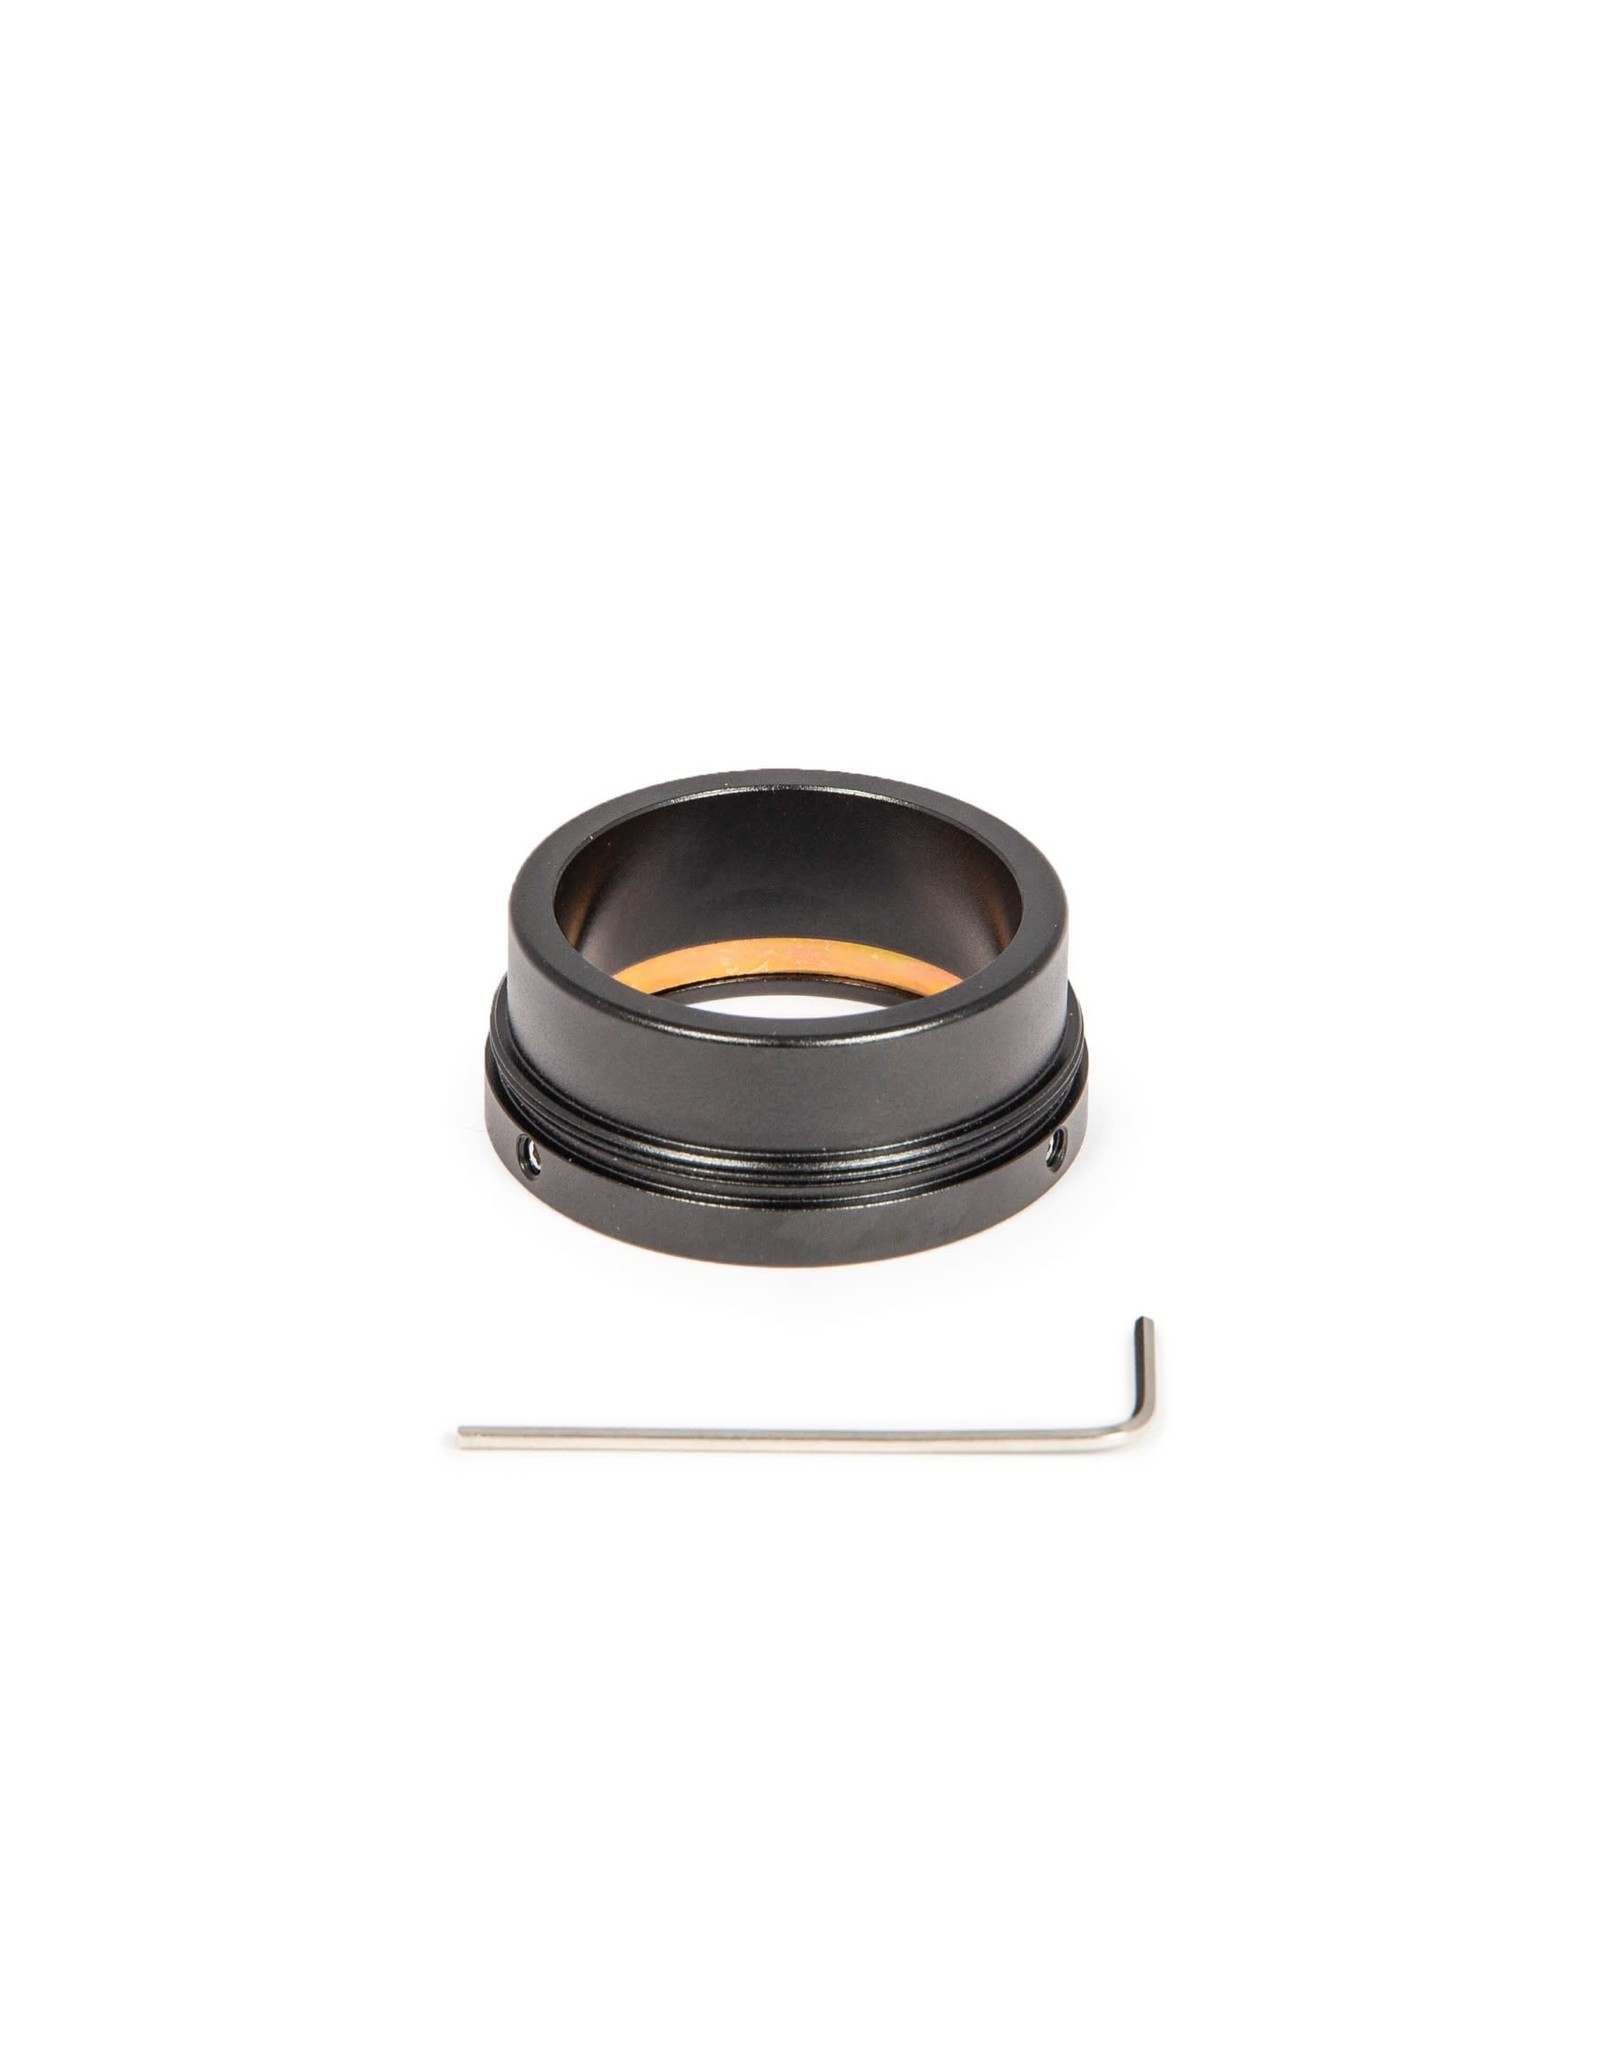 Baader Planetarium Baader 1¼" / M41 Eyepiece-Adapter for Kowa TSN 770 / 880 Spotting Scopes